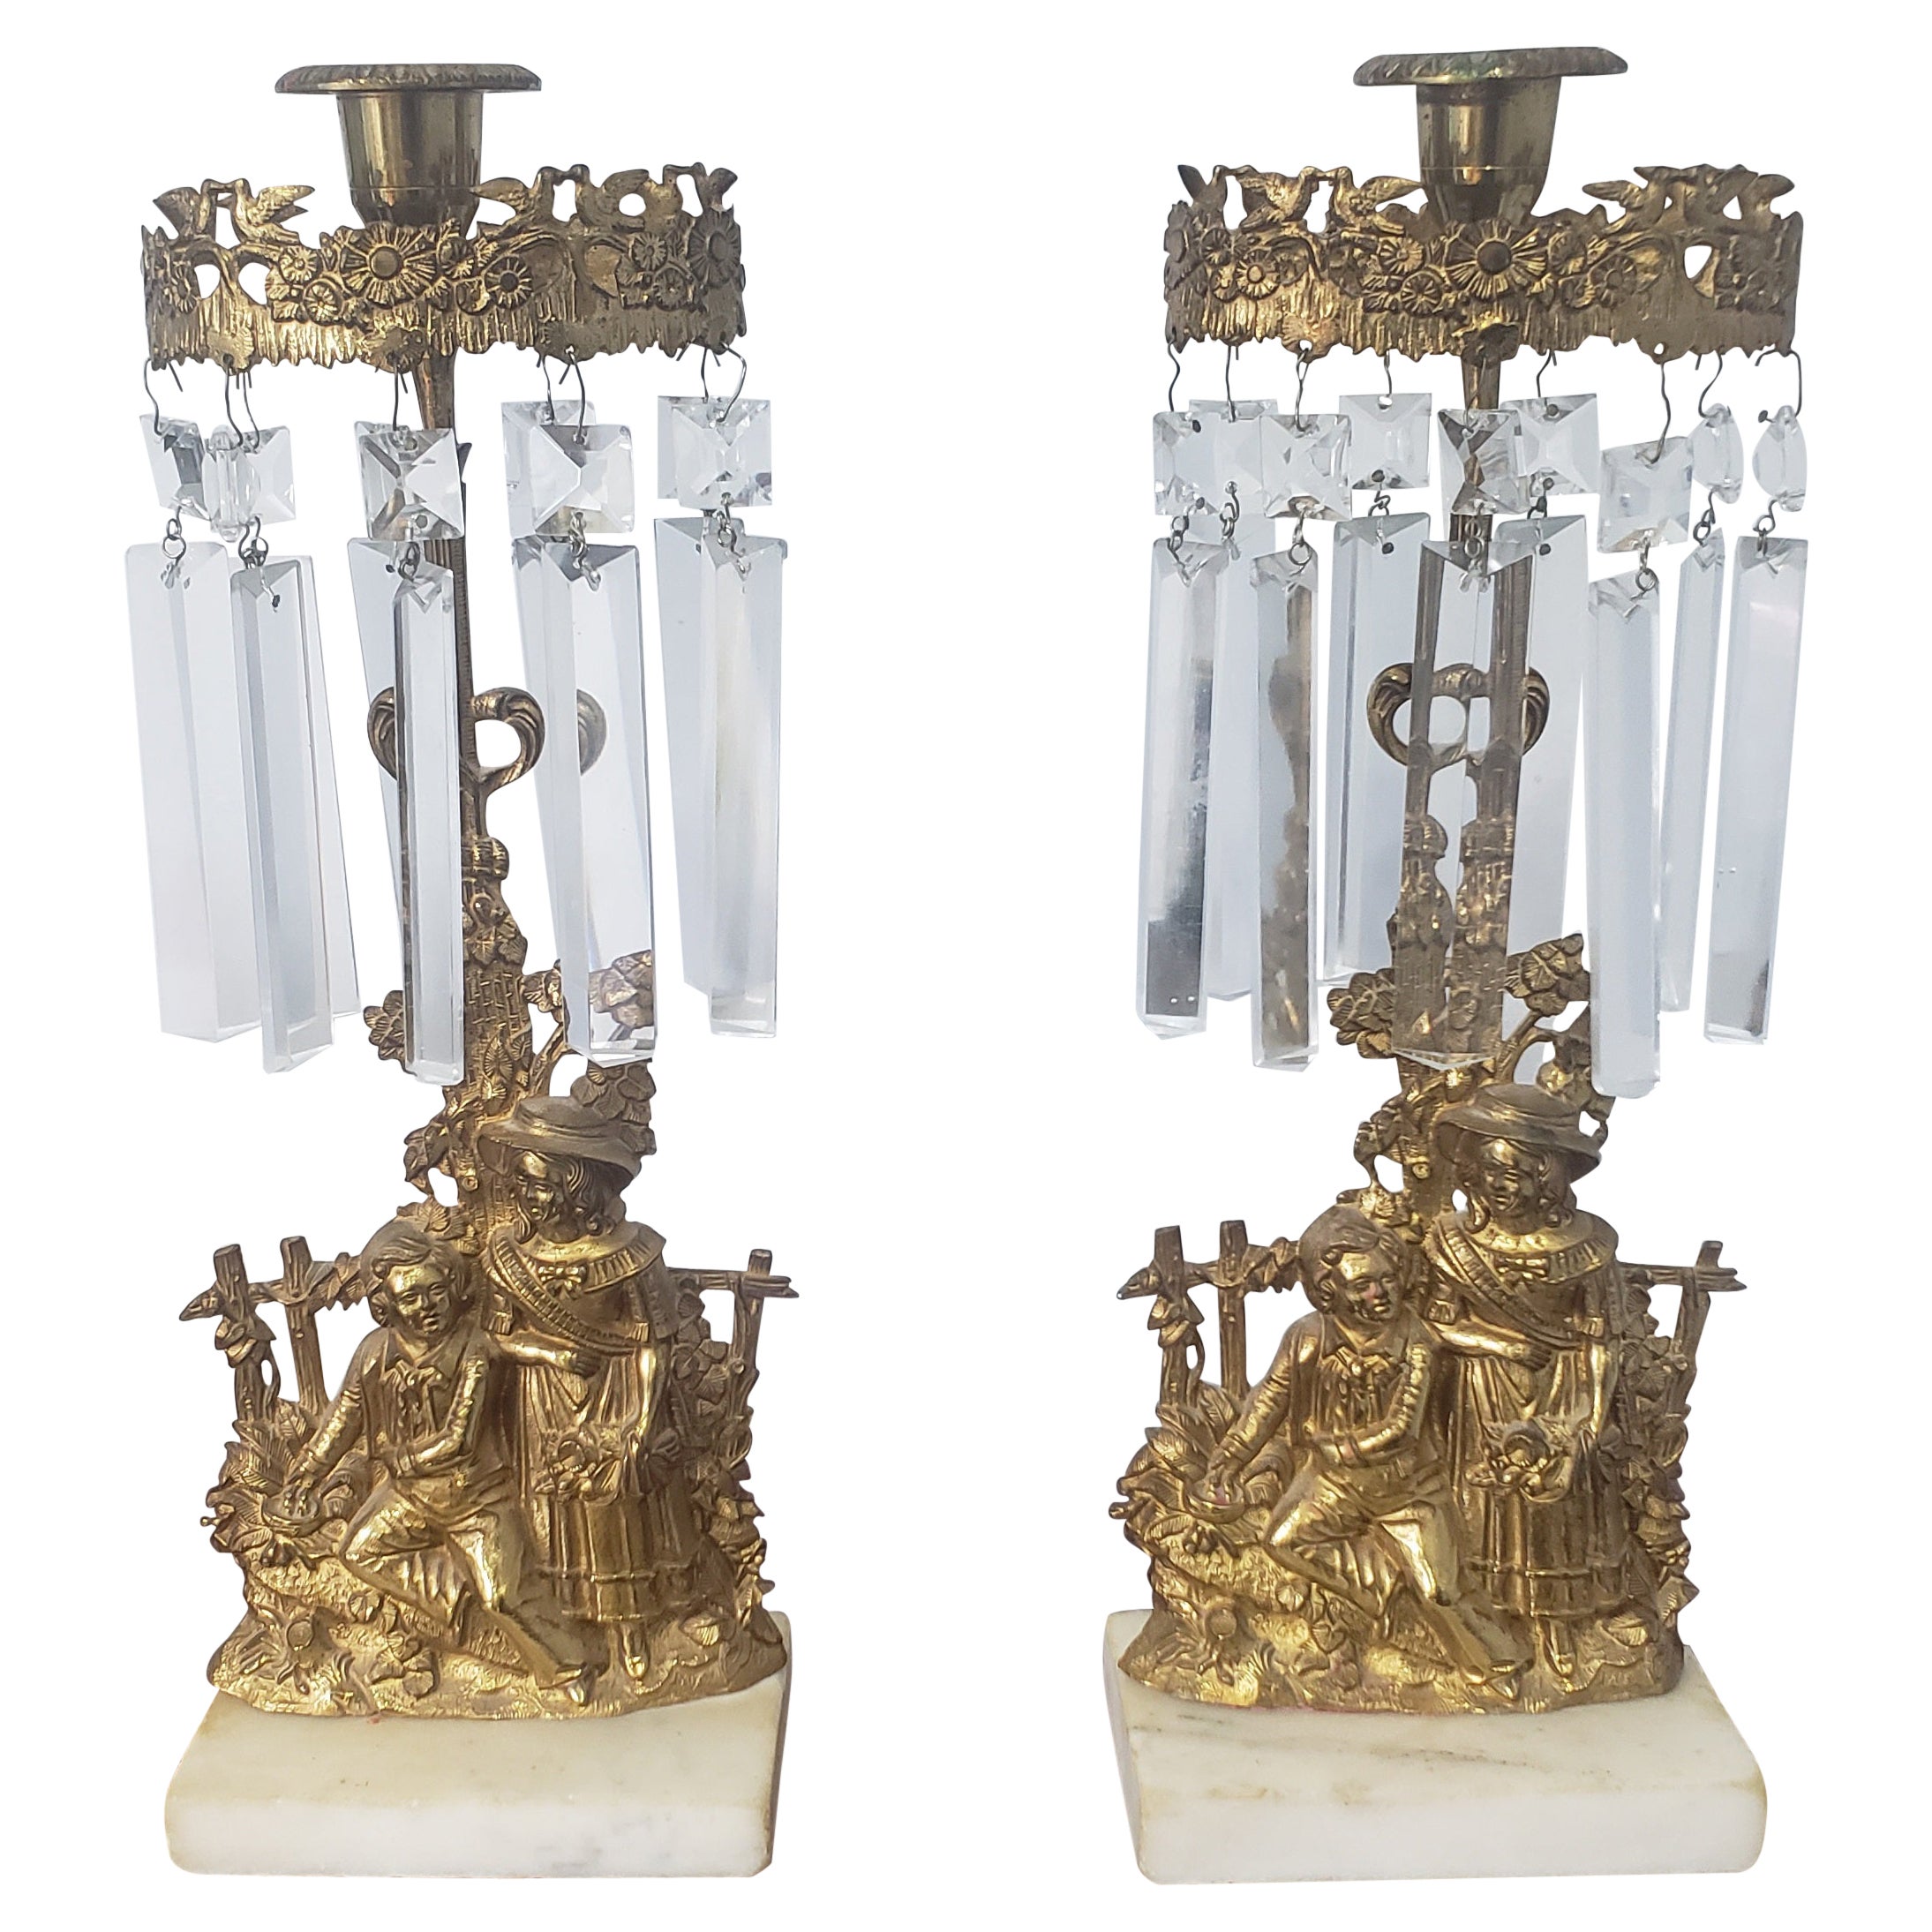 circa 1840s Cornelius and Co. Cast Brass & Marble Girandole Candlesticks, a Pair